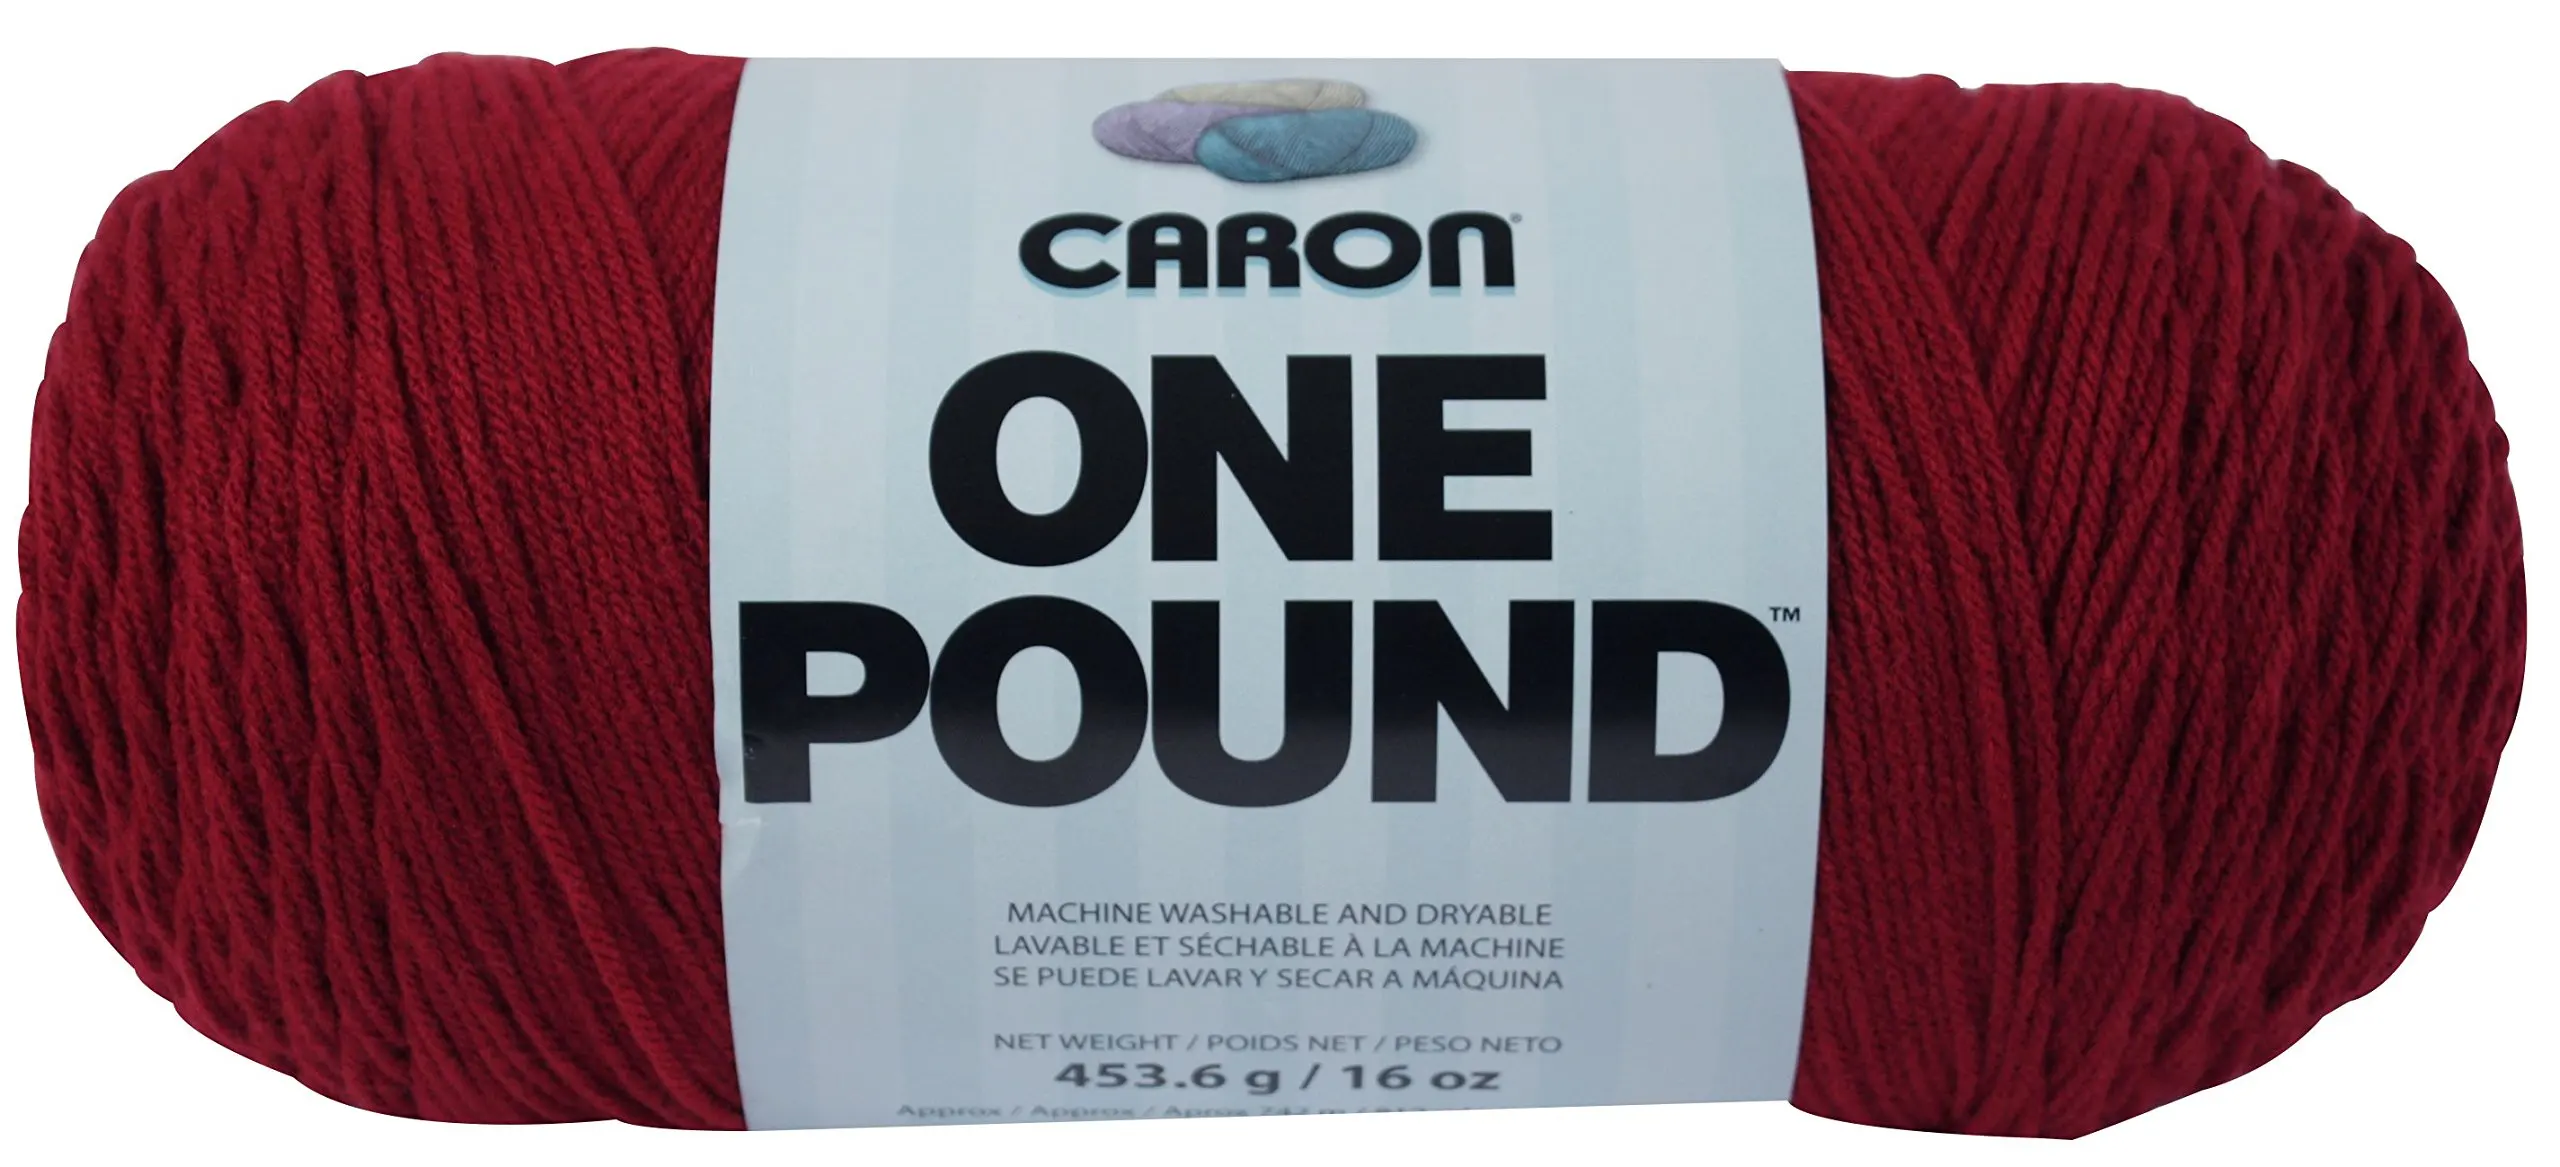 Caron 294010-10562 One Pound Yarn, 16 Ounce, Claret, Single Ball.